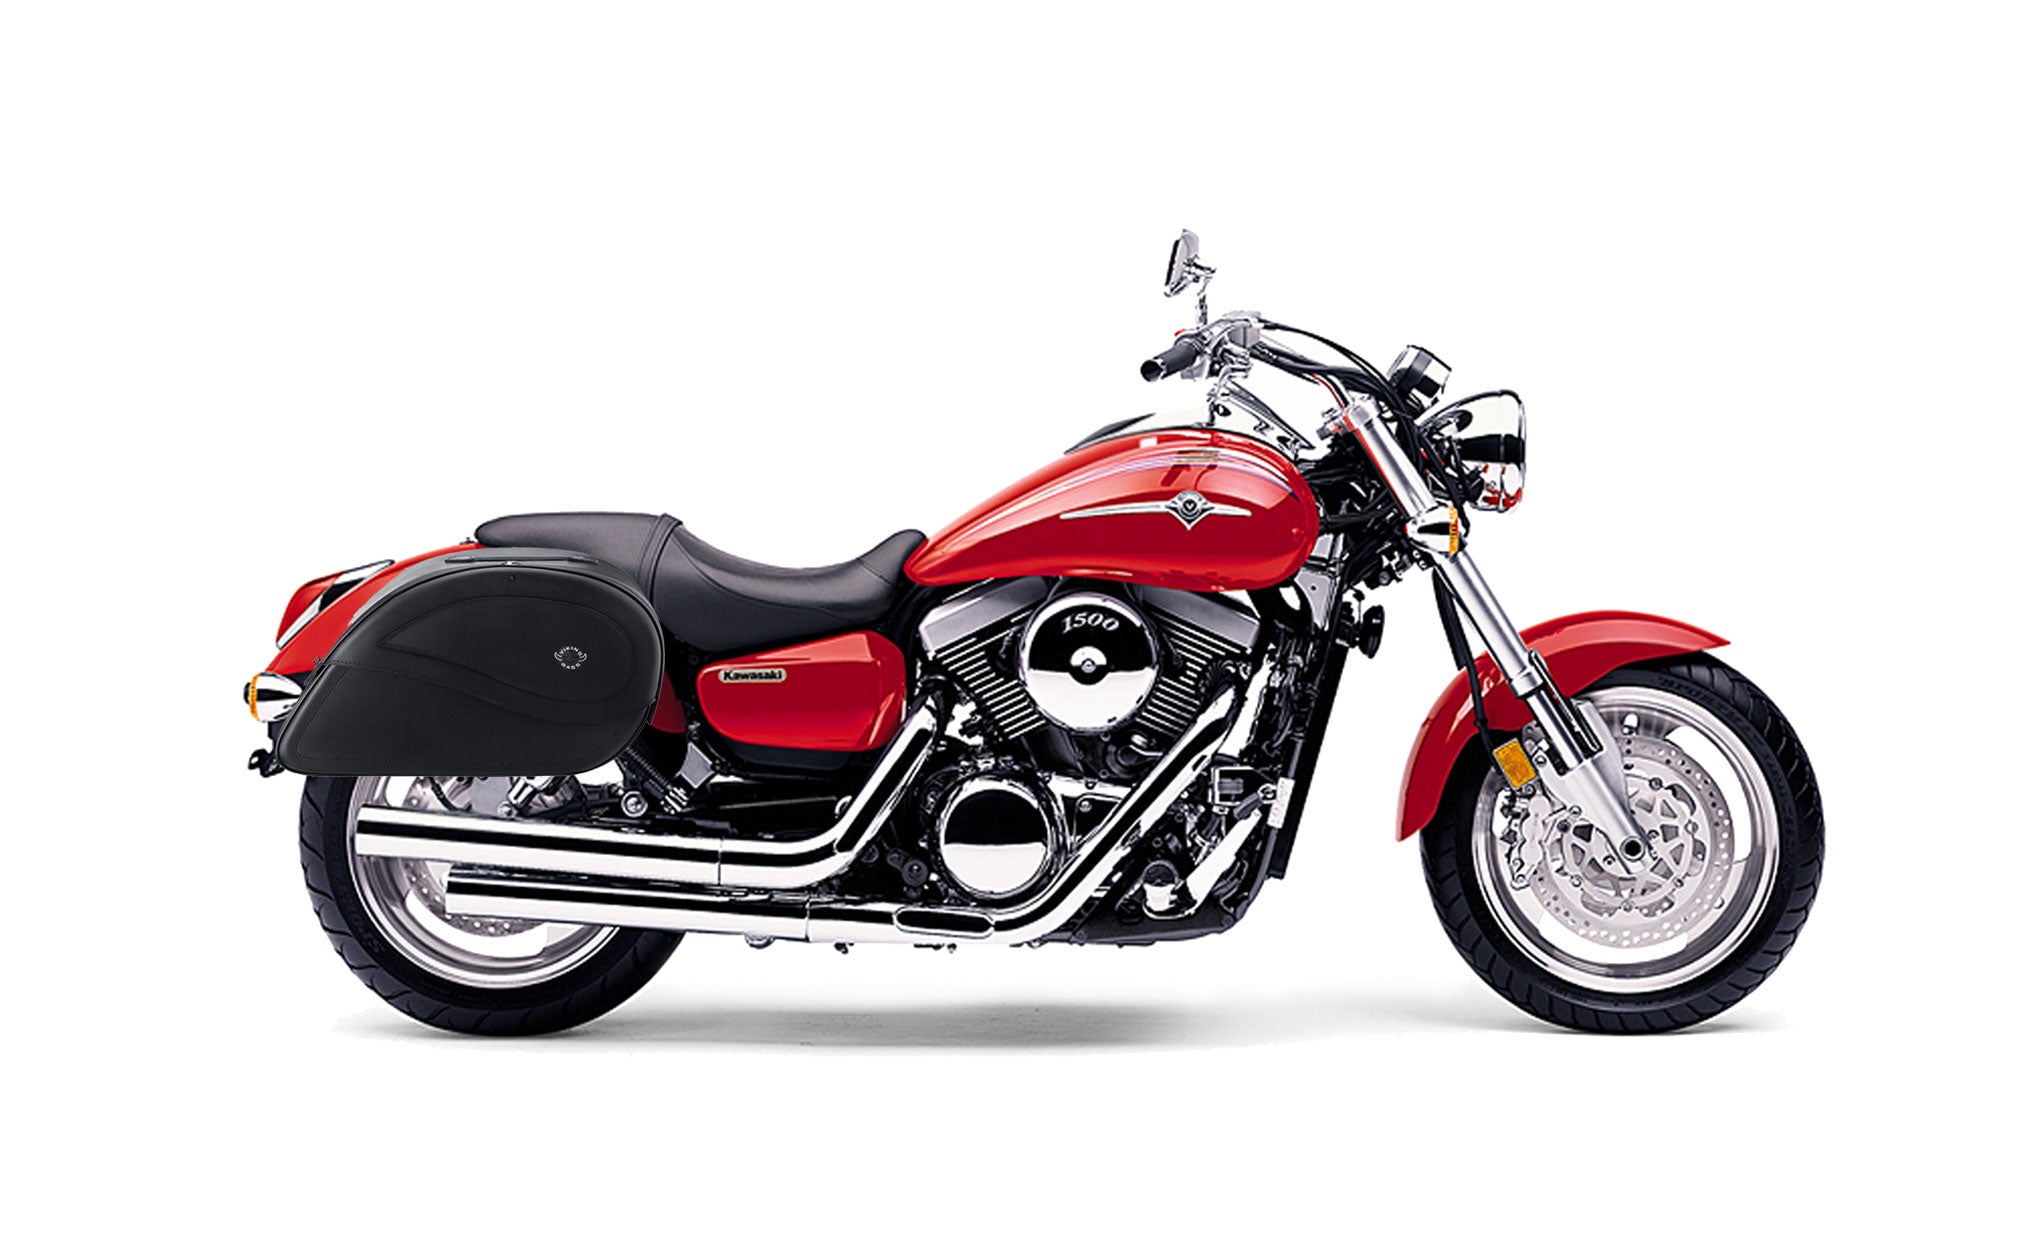 Viking Ultimate Large Kawasaki Mean Streak 1500 Leather Motorcycle Saddlebags on Bike Photo @expand